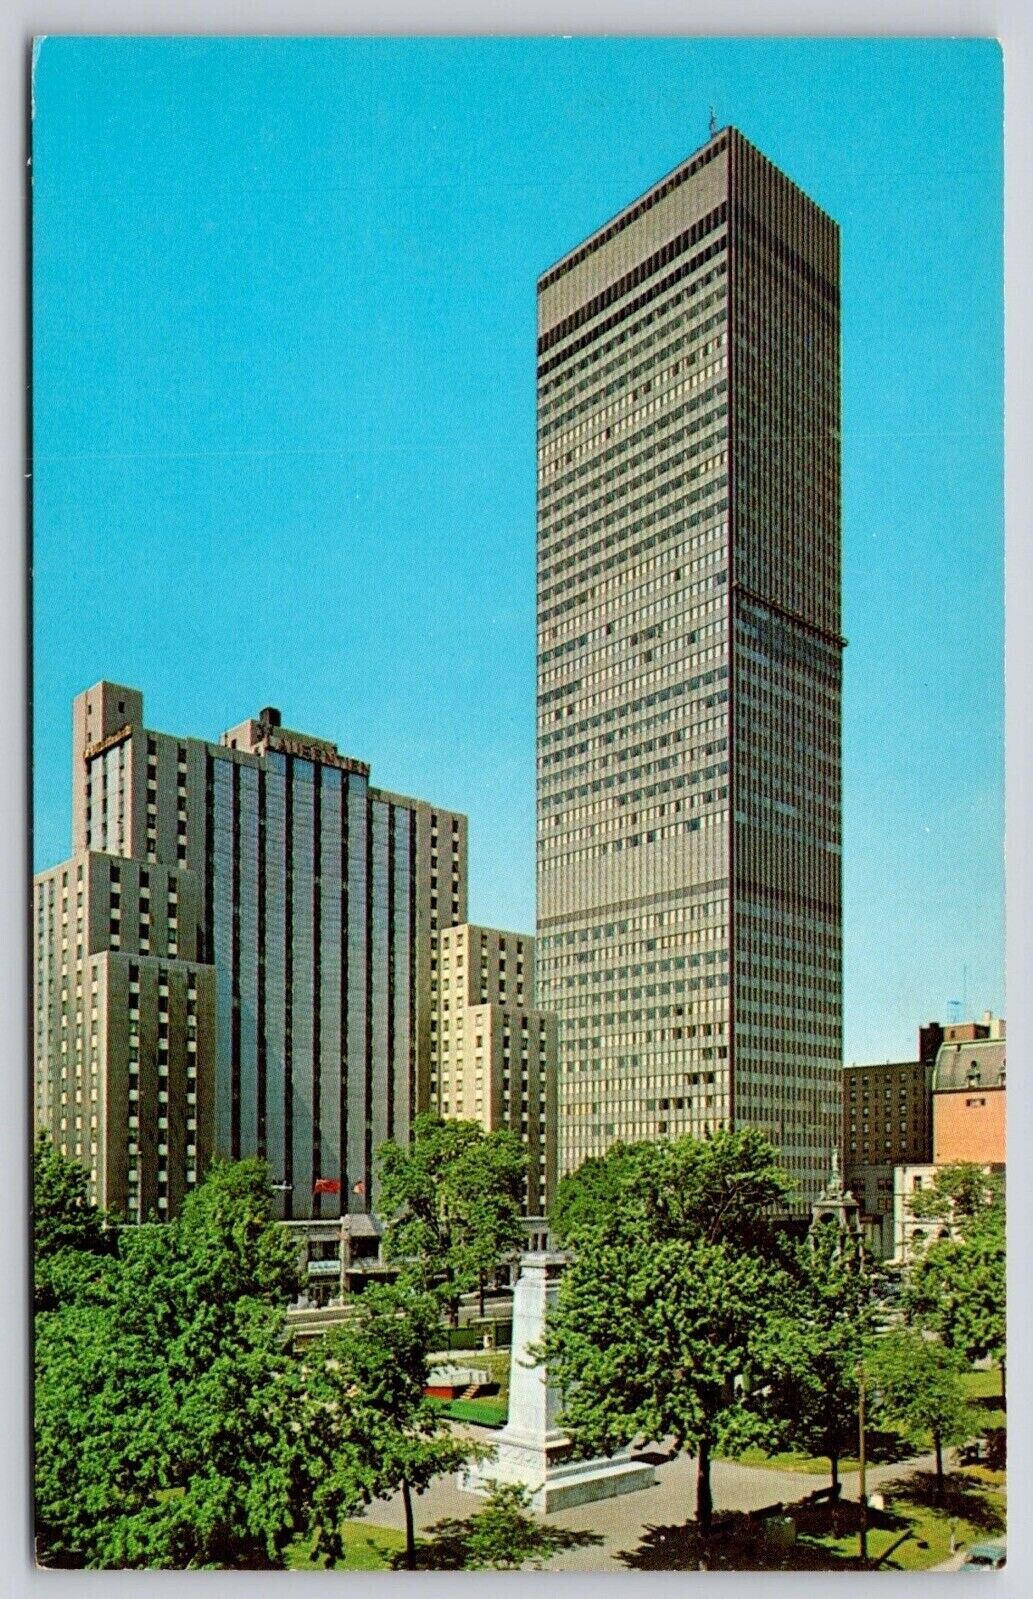 Dominion Square Park Sharaton Laurentien Hotel Imperial Bank Monument Postcard